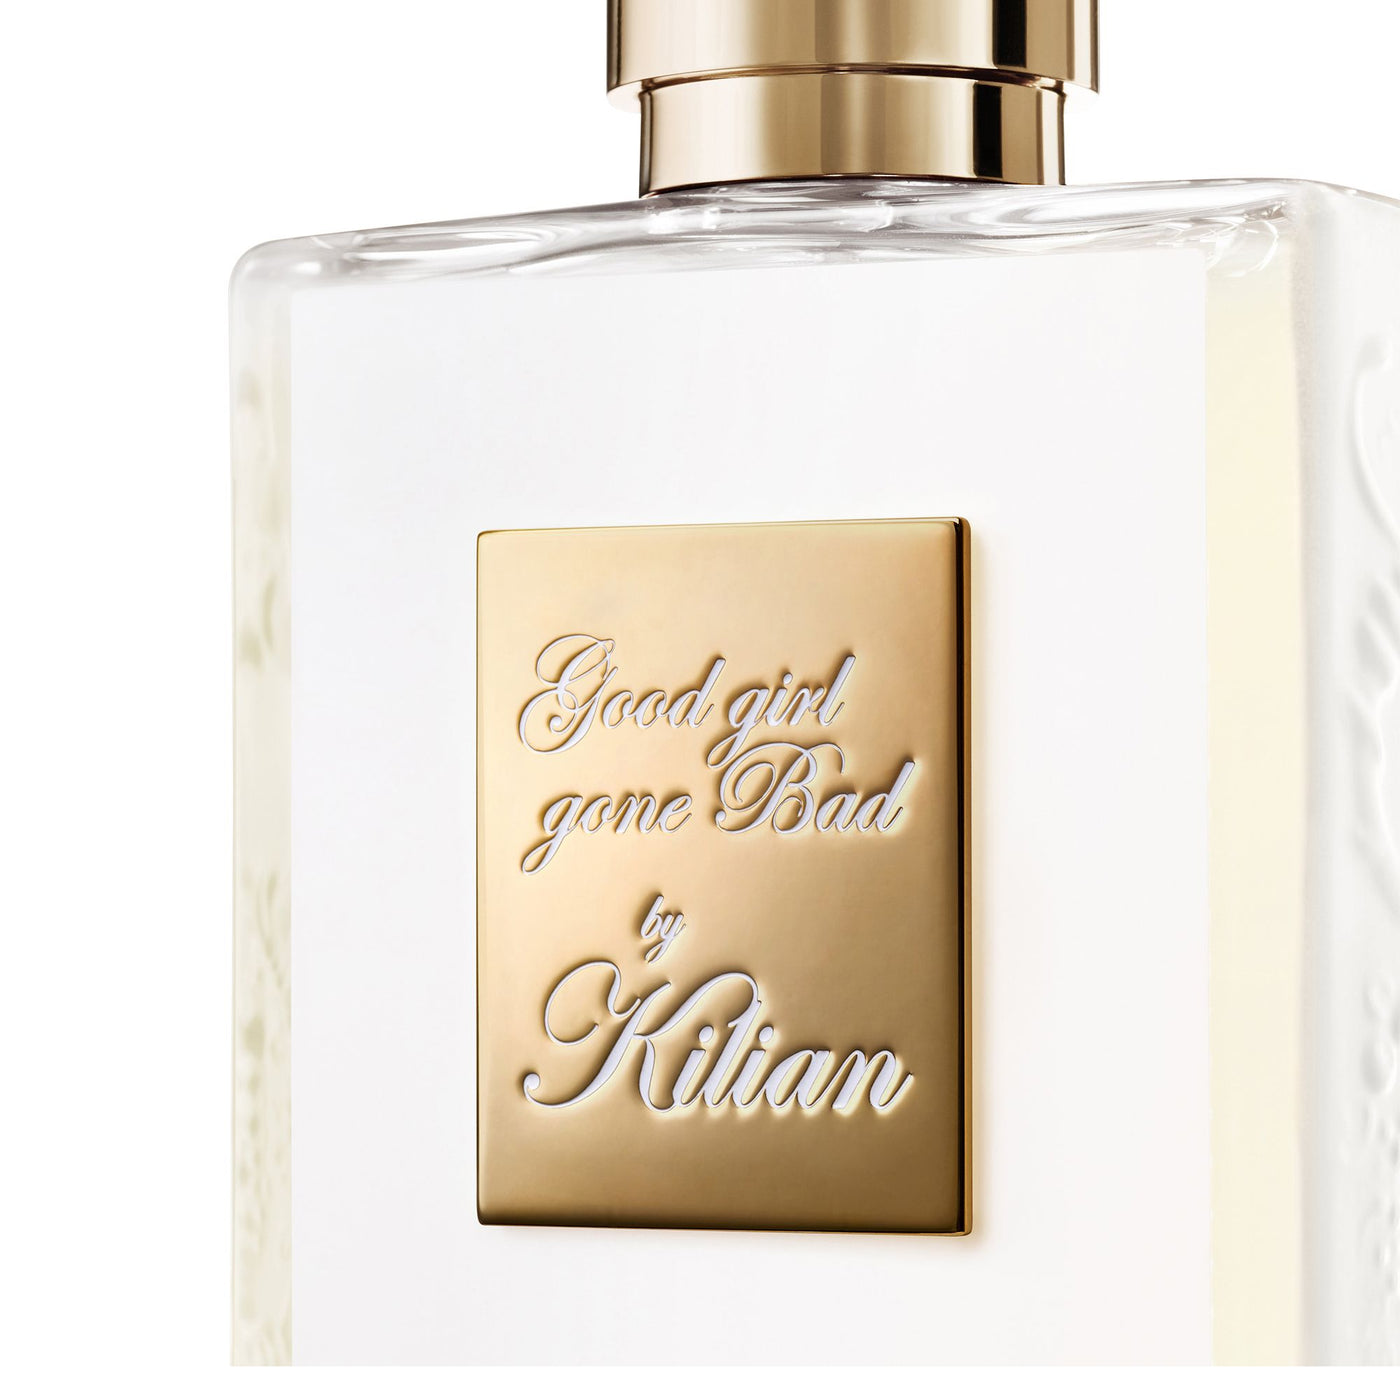 Kilian Good Girl Gone Bad by Kilian EDP original 3ml / 5ml / 